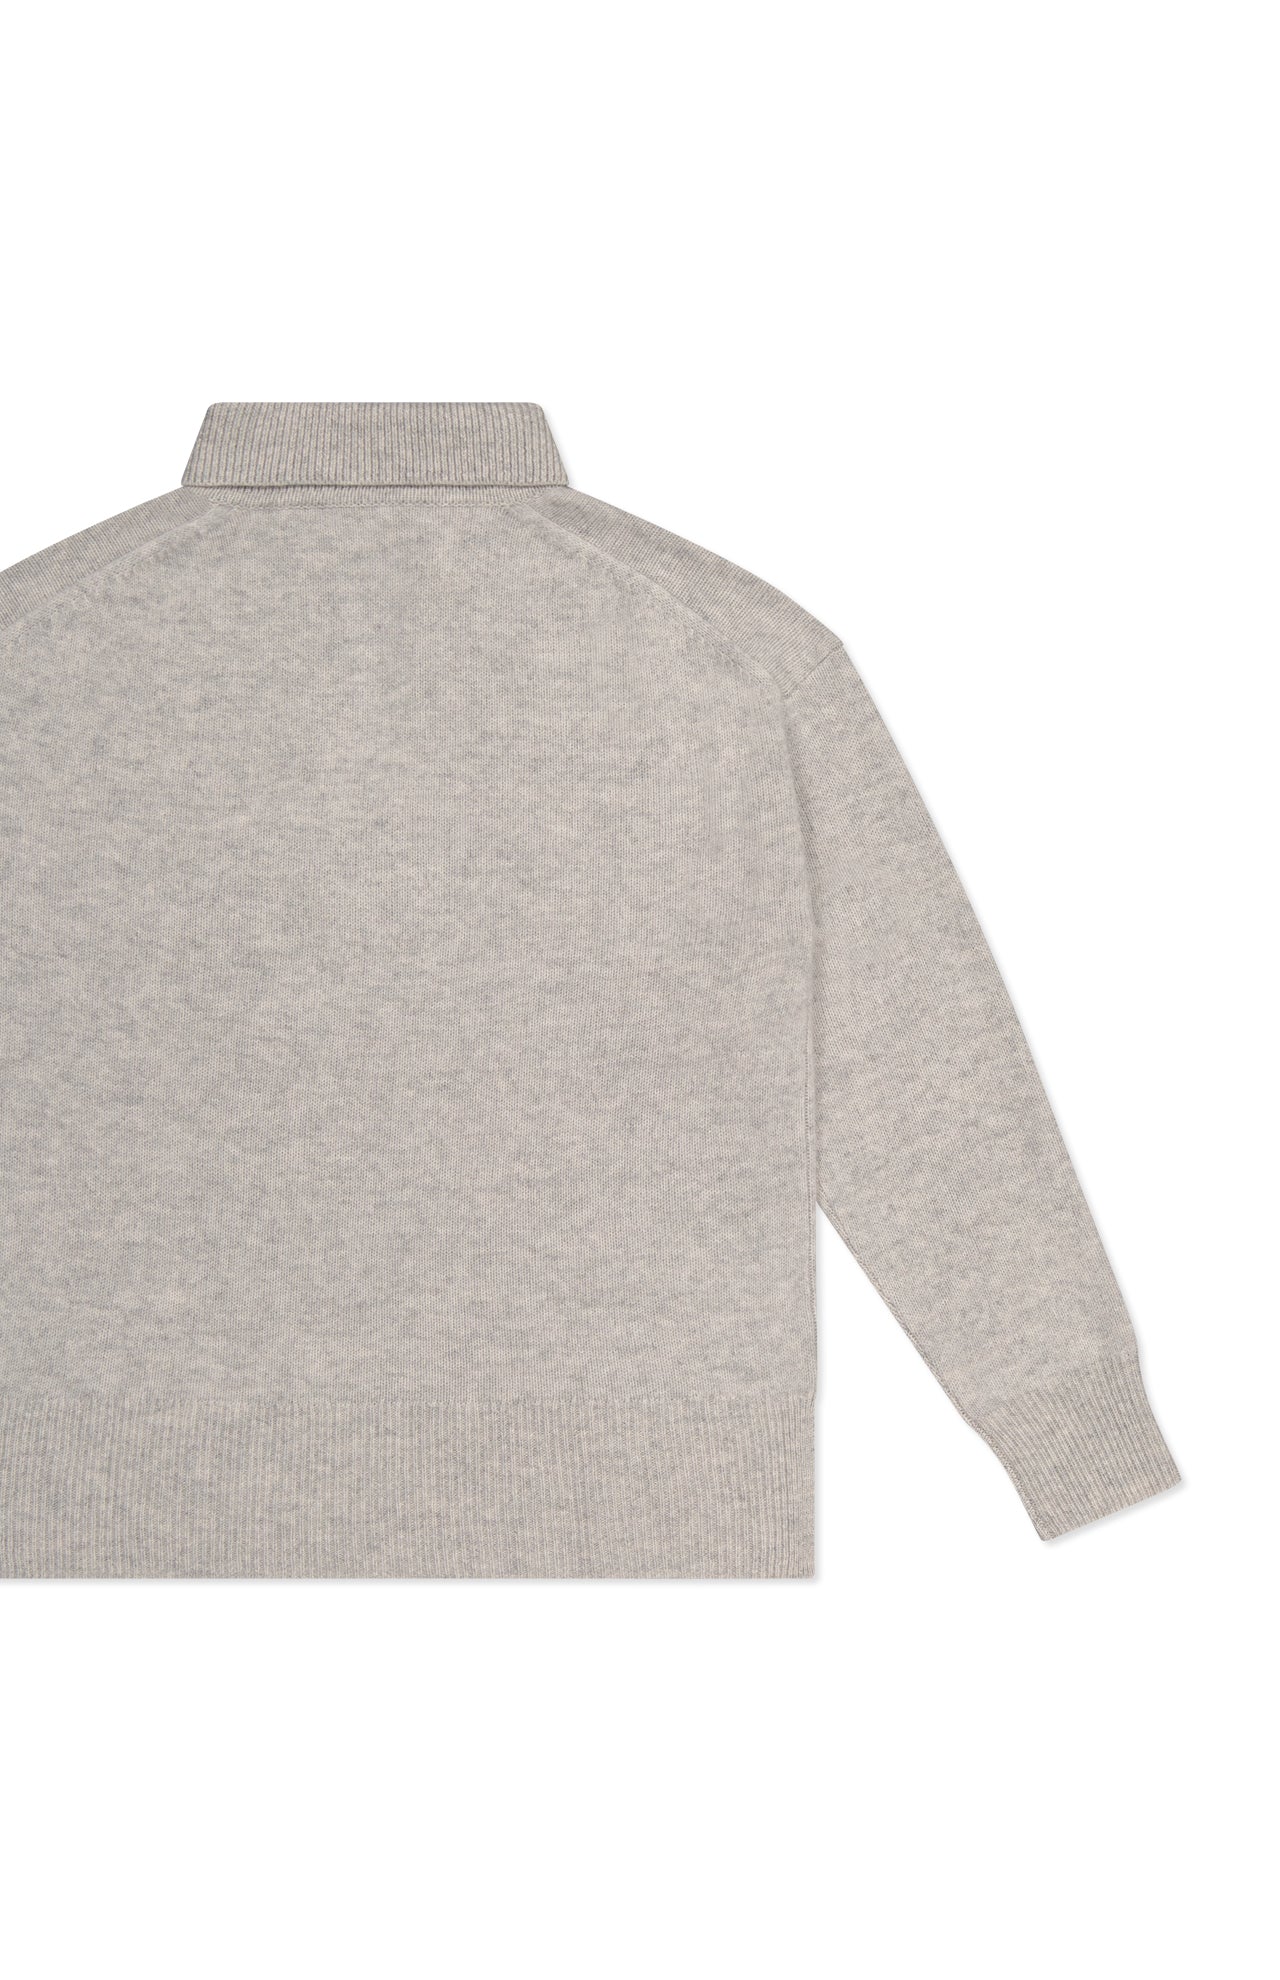 Cashmere Polo Sweater (7254356656243)